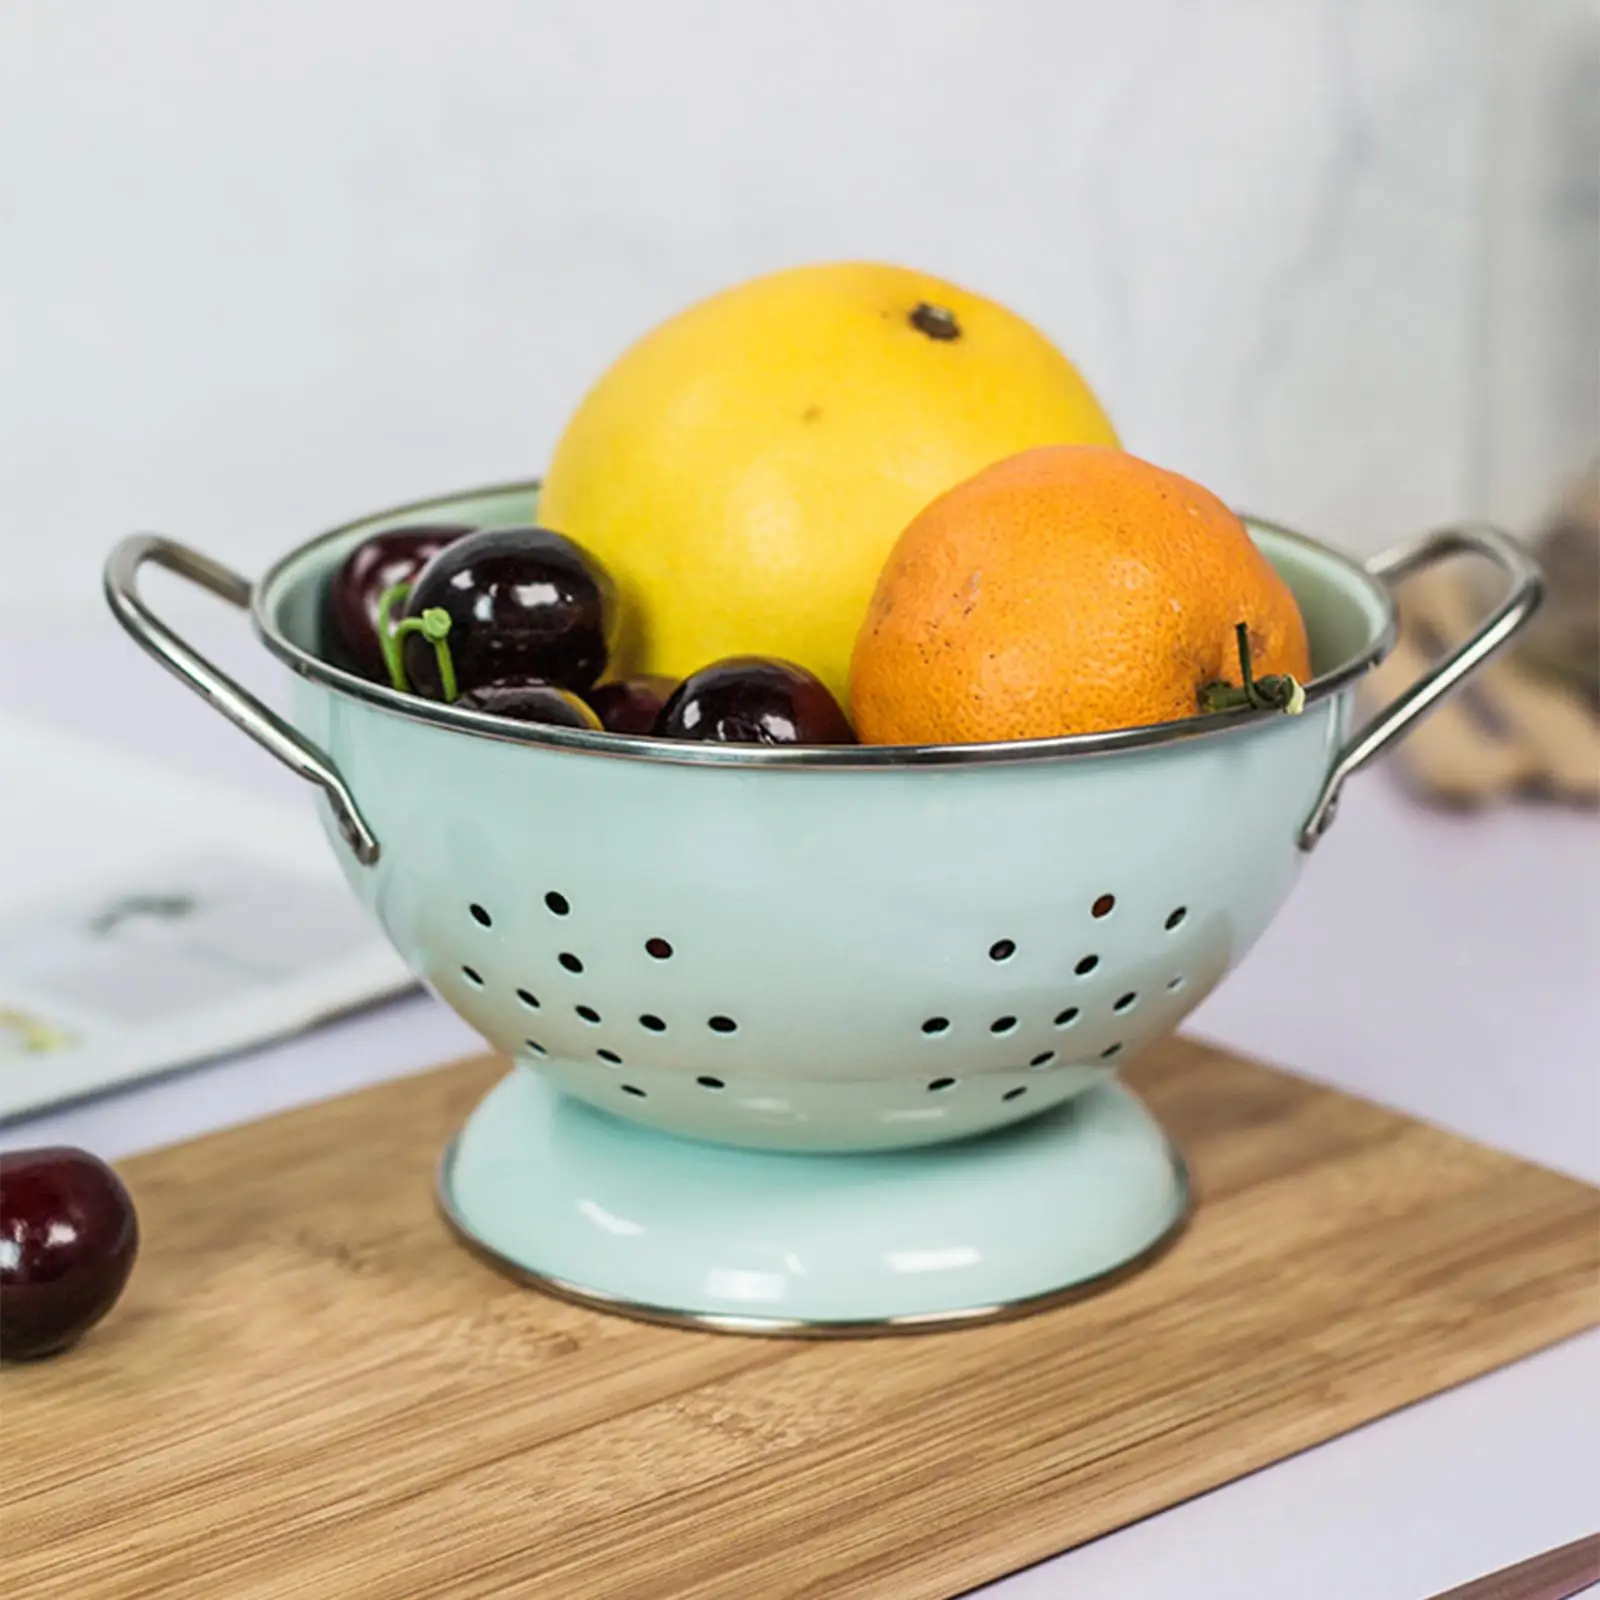 Enamel Coated Fruit Bowl Berry Colander Self Draining Multipurpose Serving Bowl with Handle for Veggies Fruits Countertop Home